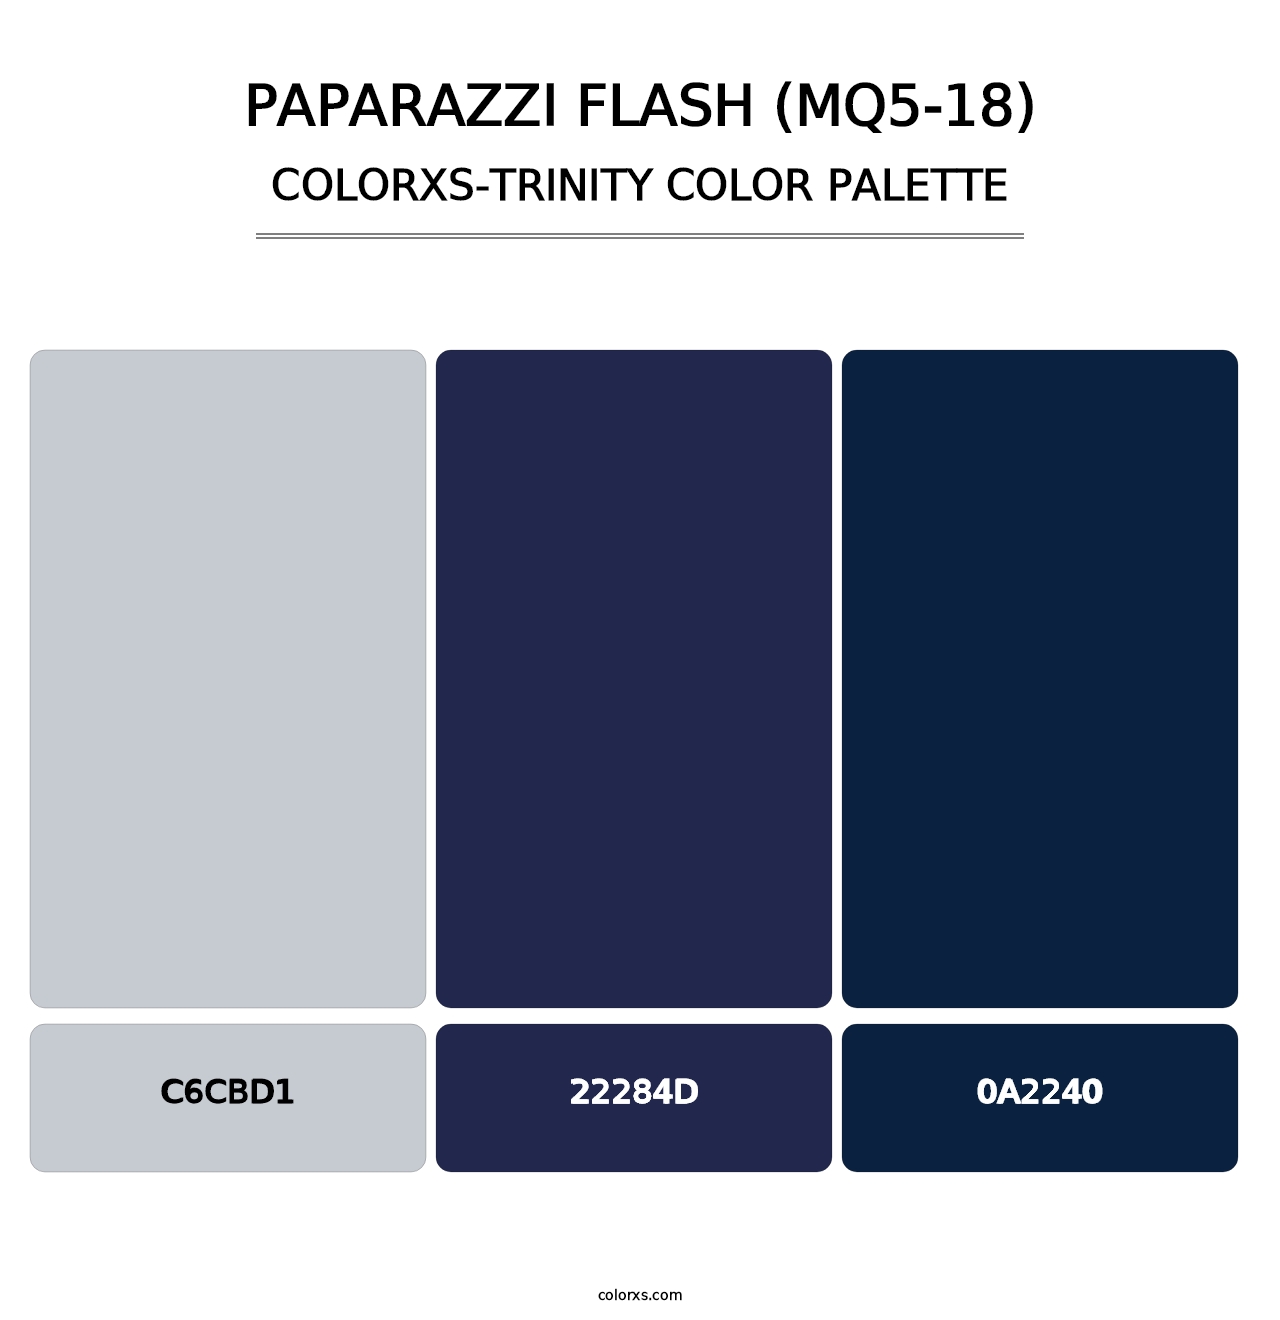 Paparazzi Flash (MQ5-18) - Colorxs Trinity Palette